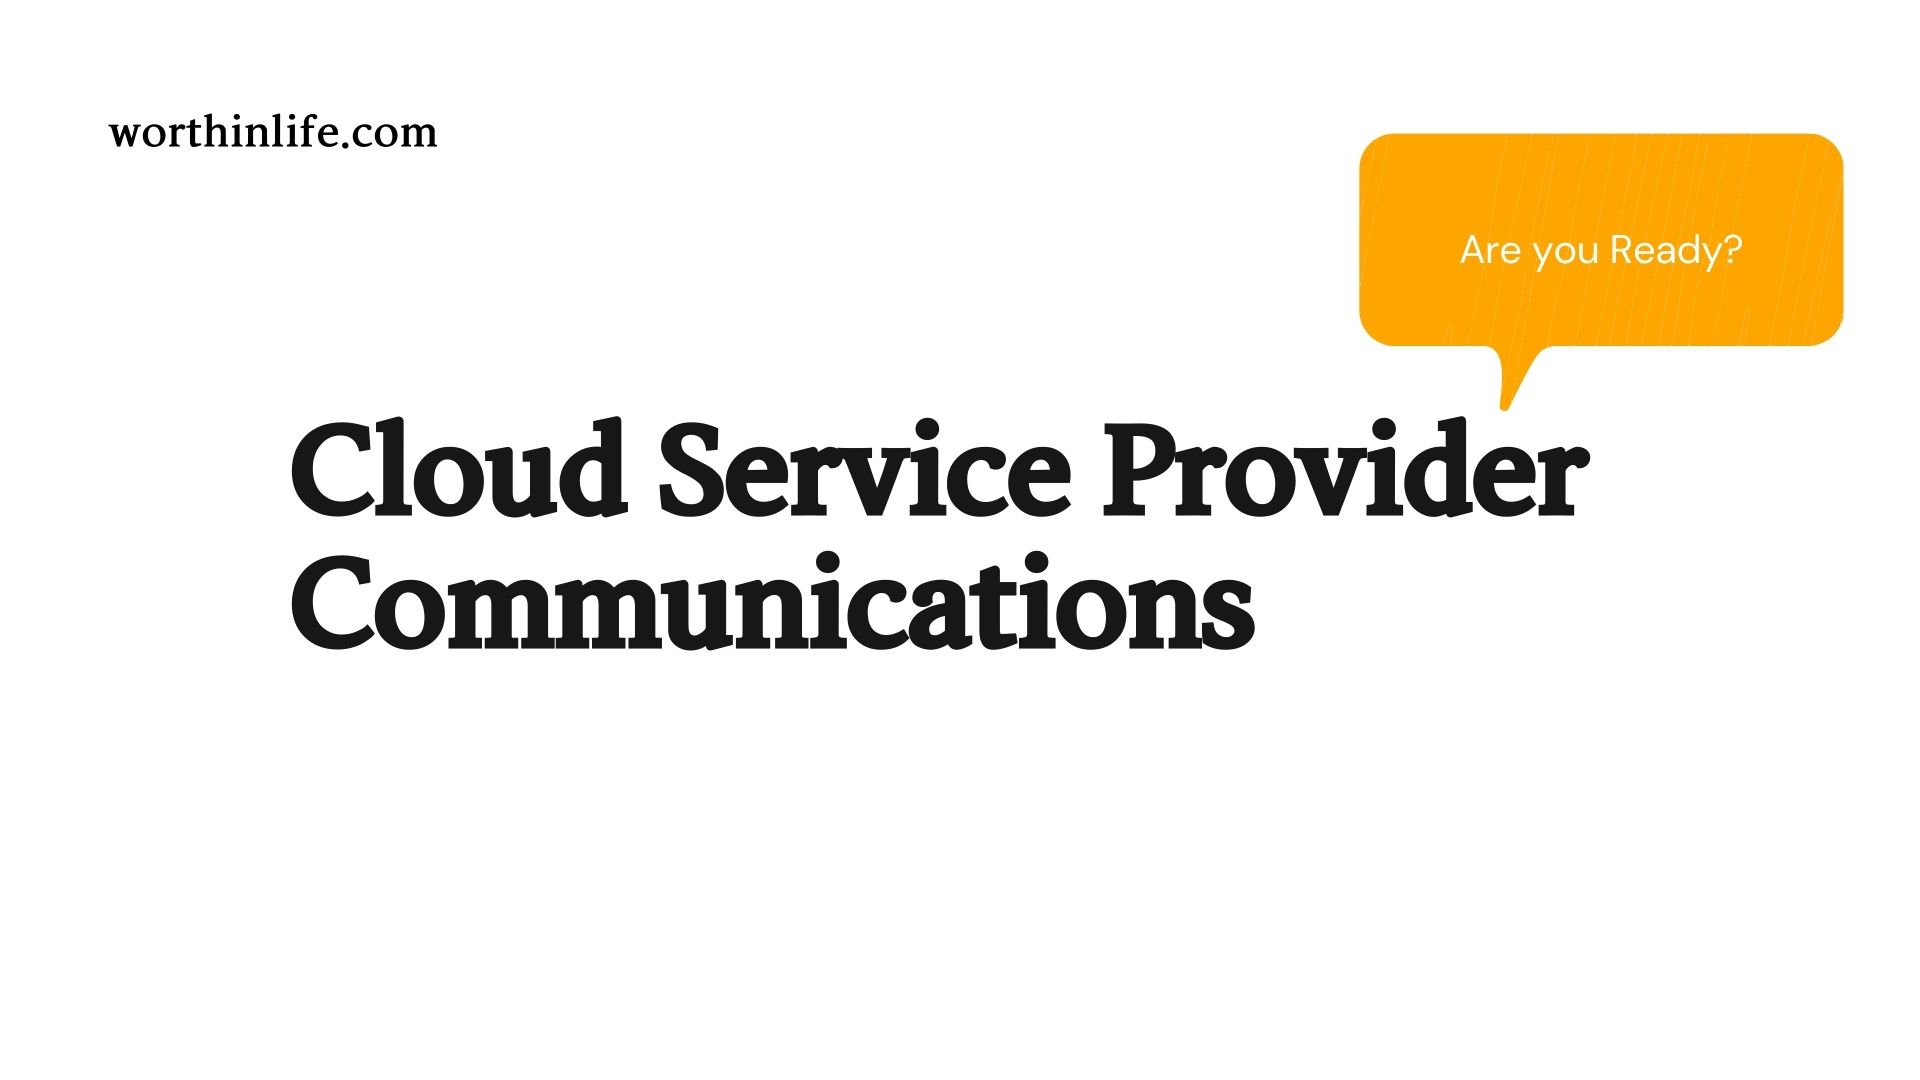 Cloud Service Provider Communications